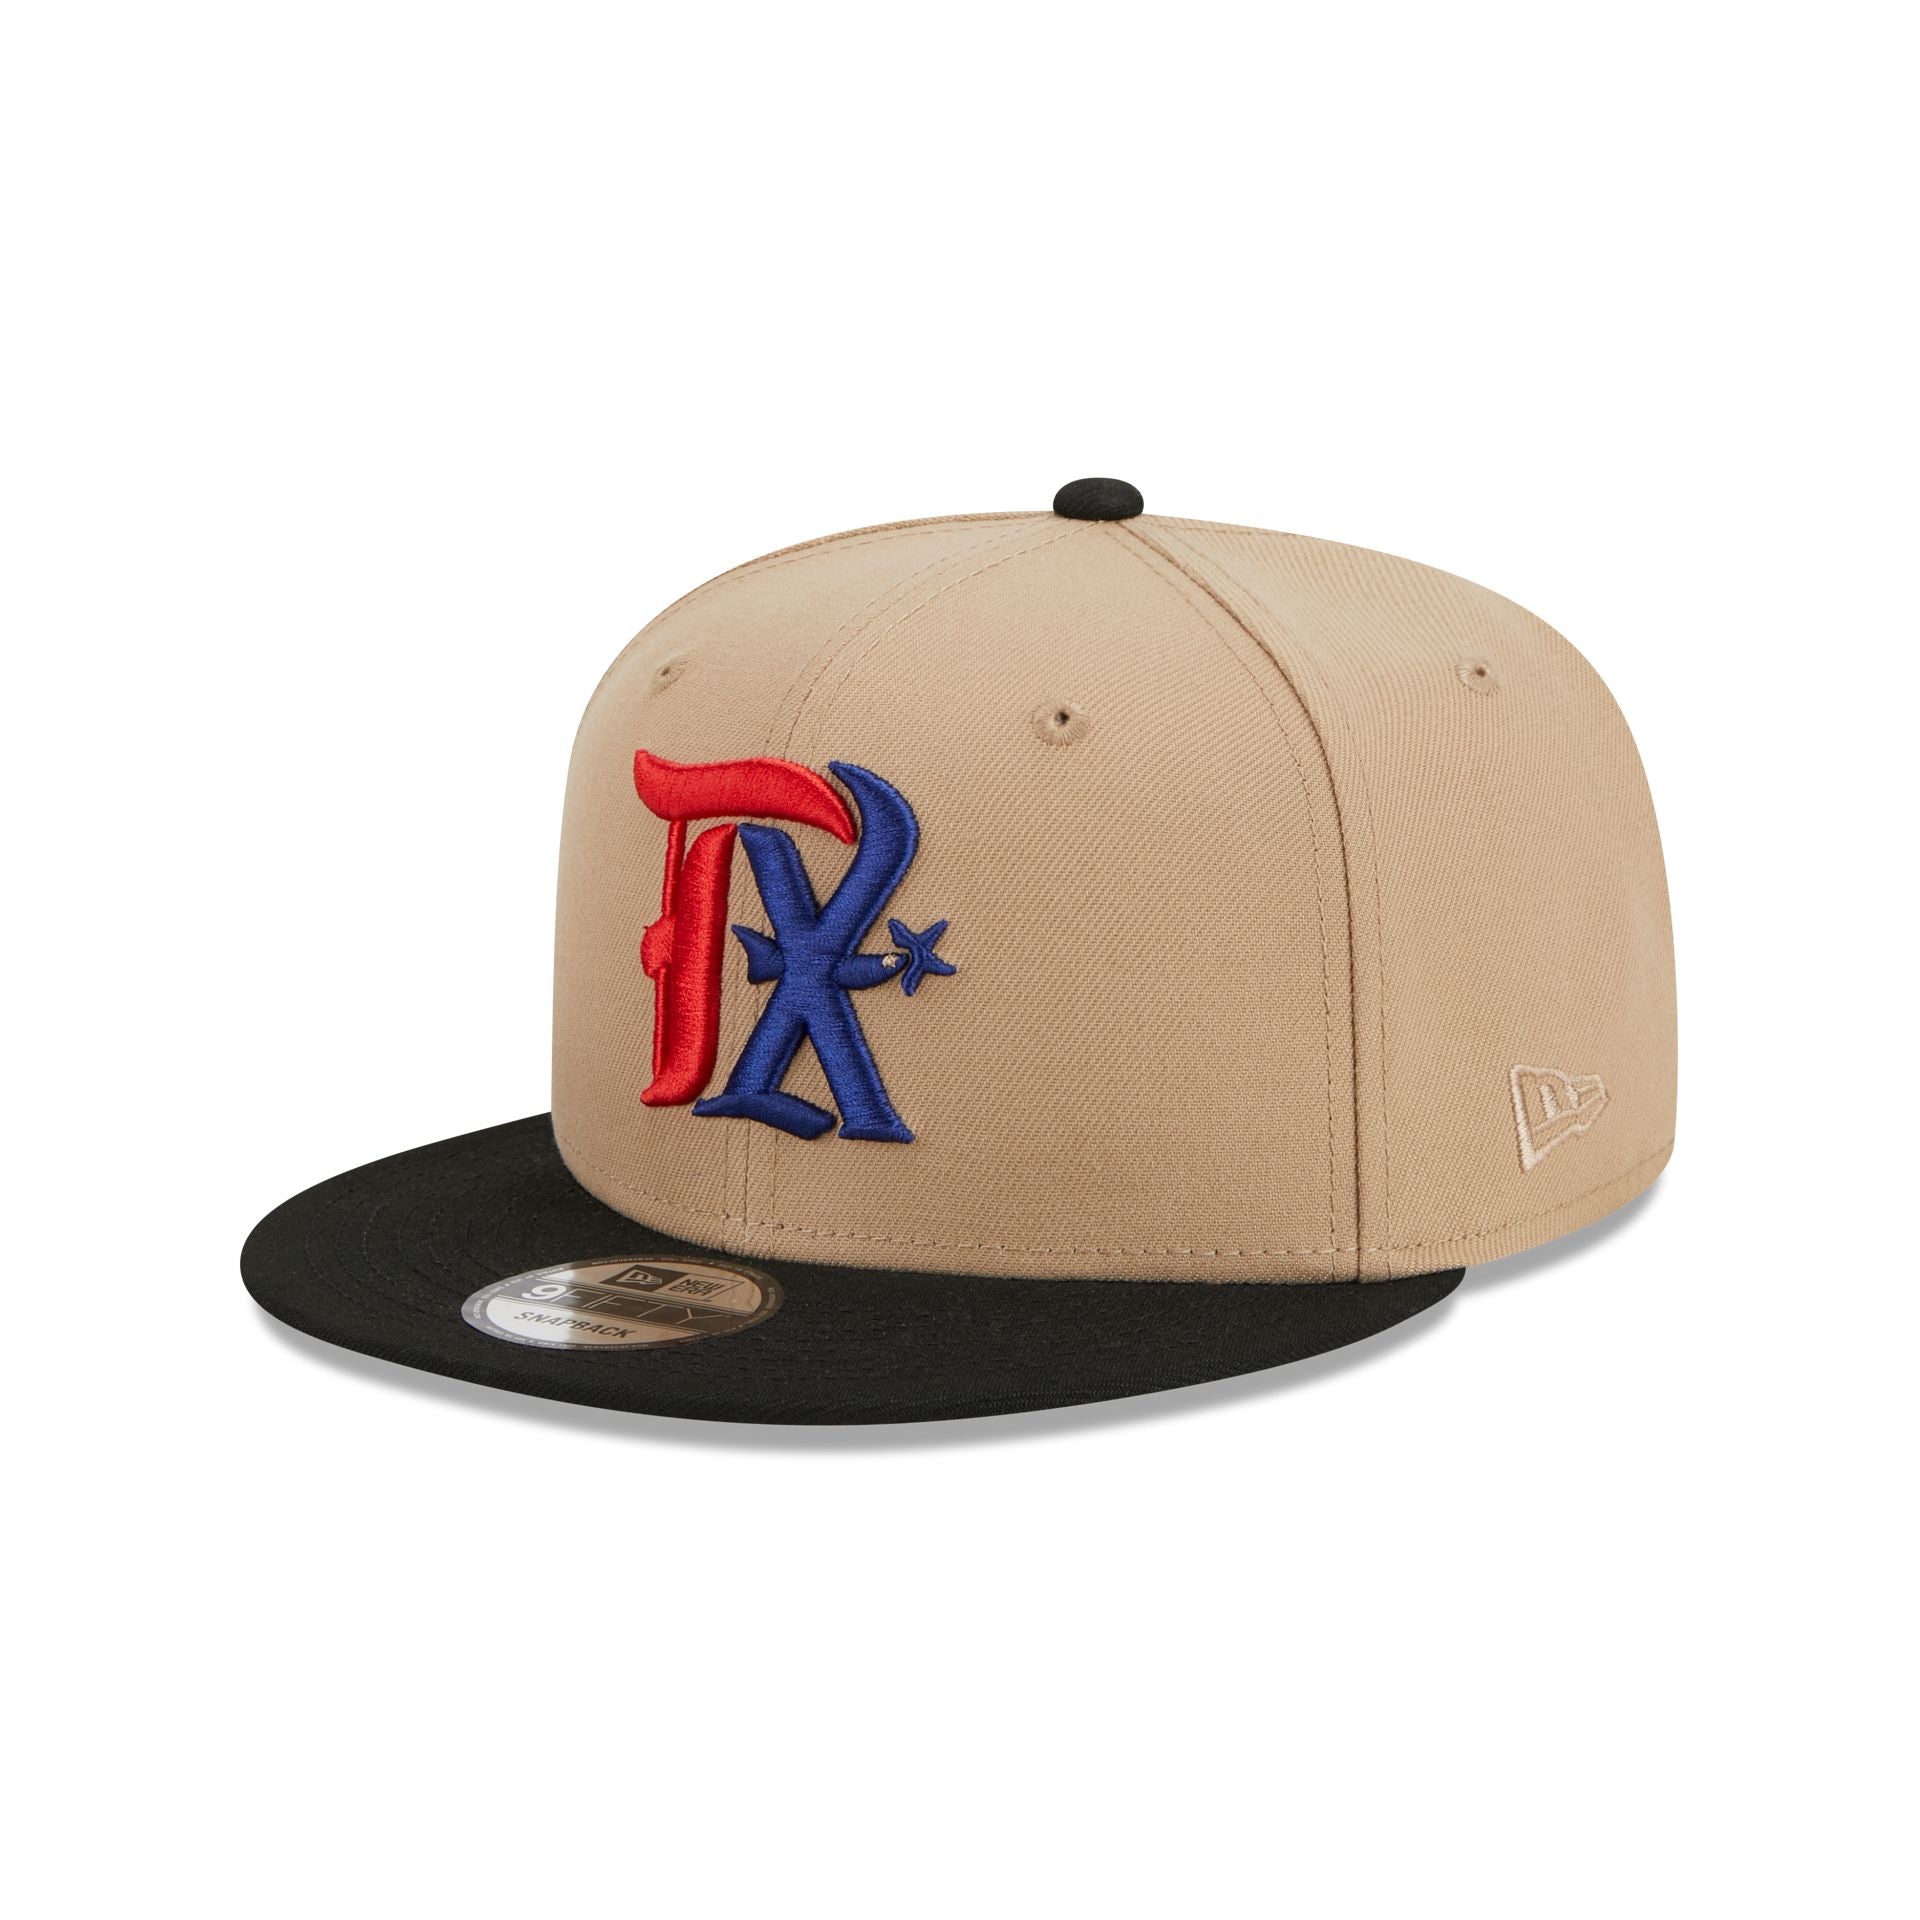 New Era, Accessories, New Era Texas Rangers Hat